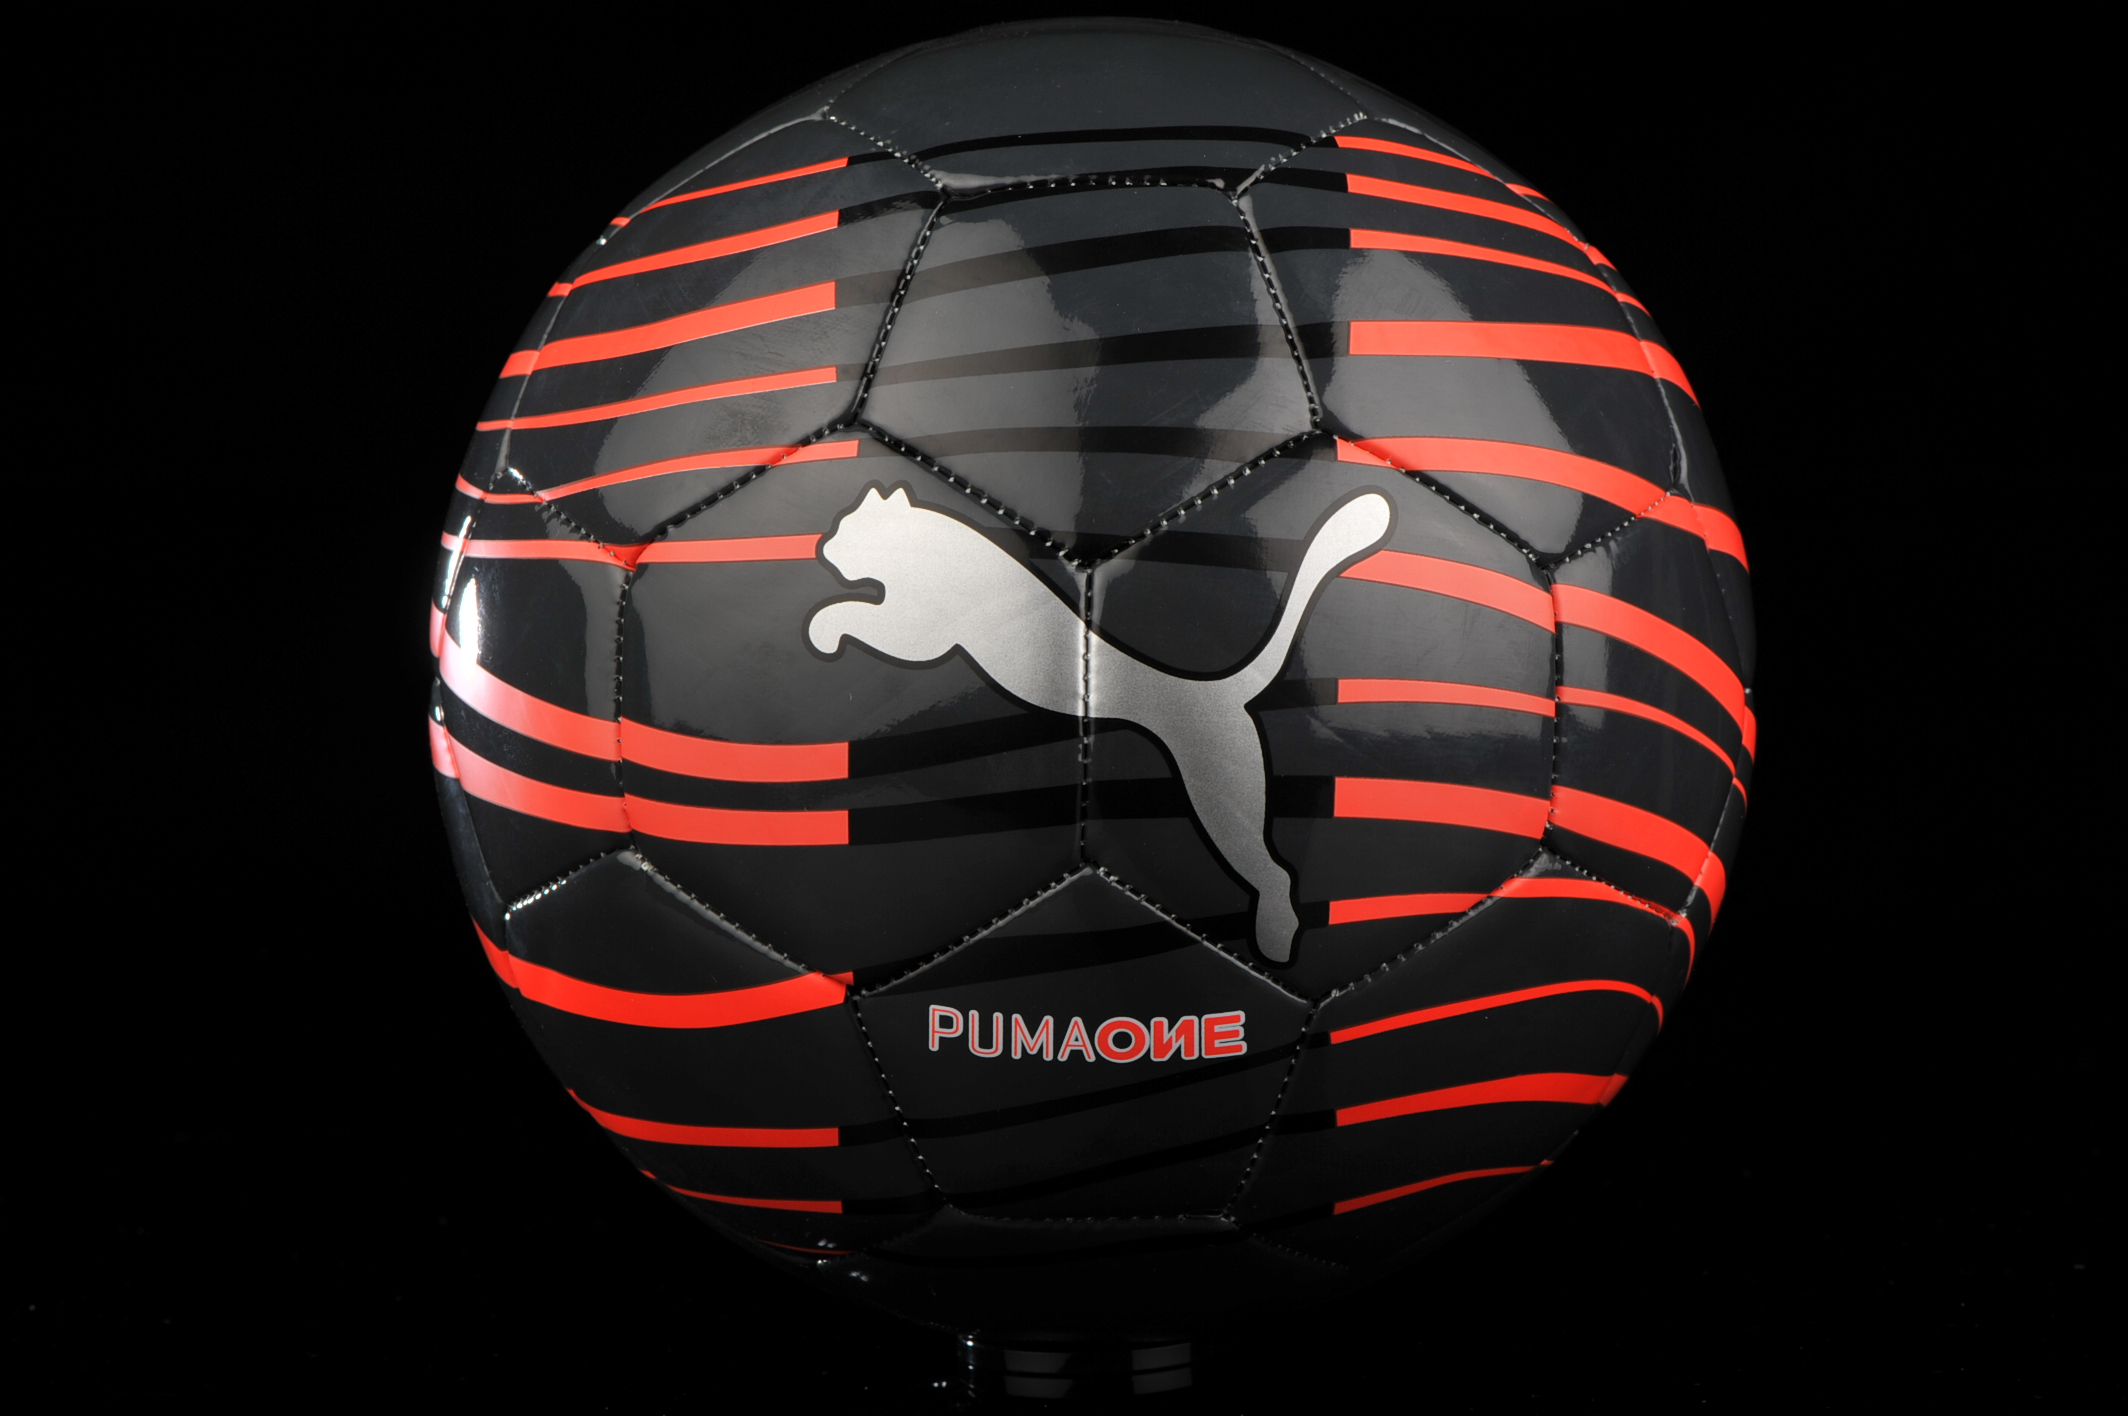 Ball Puma One Wave 082822 02 size 5 | R 